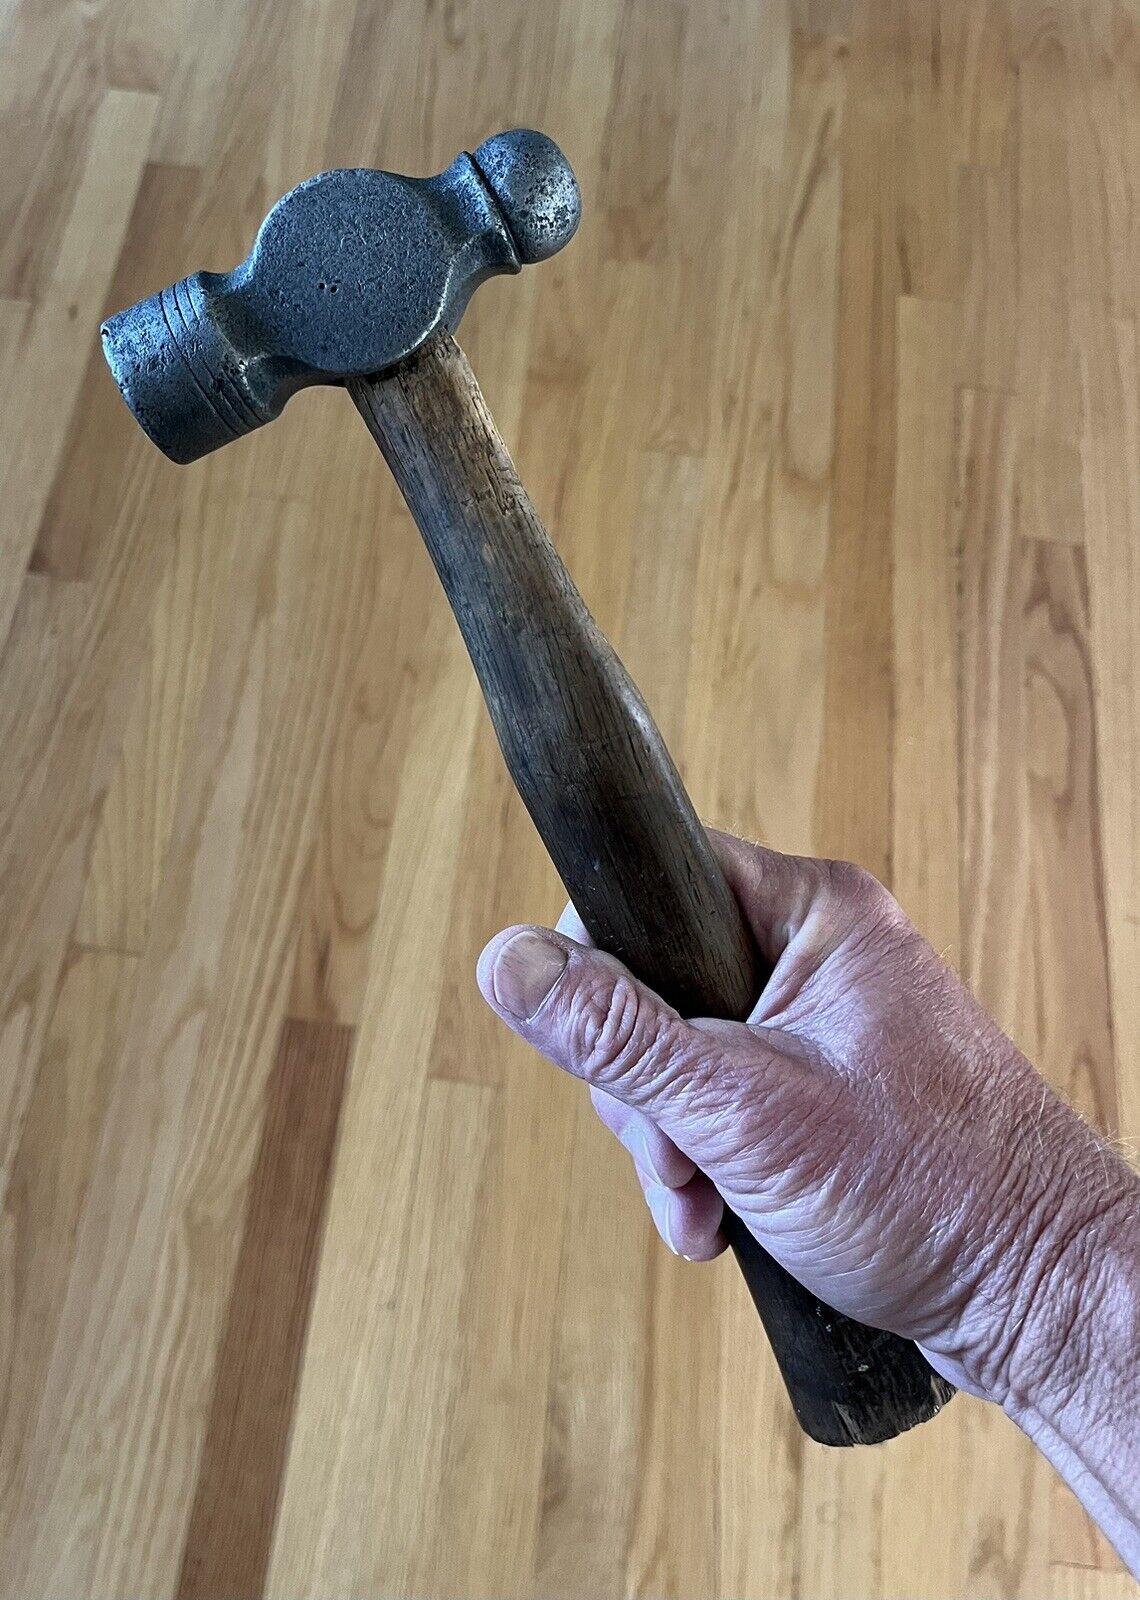 Very Rare vintage Ballpeen Hammer unlike others . Beautiful Head Design , unkown